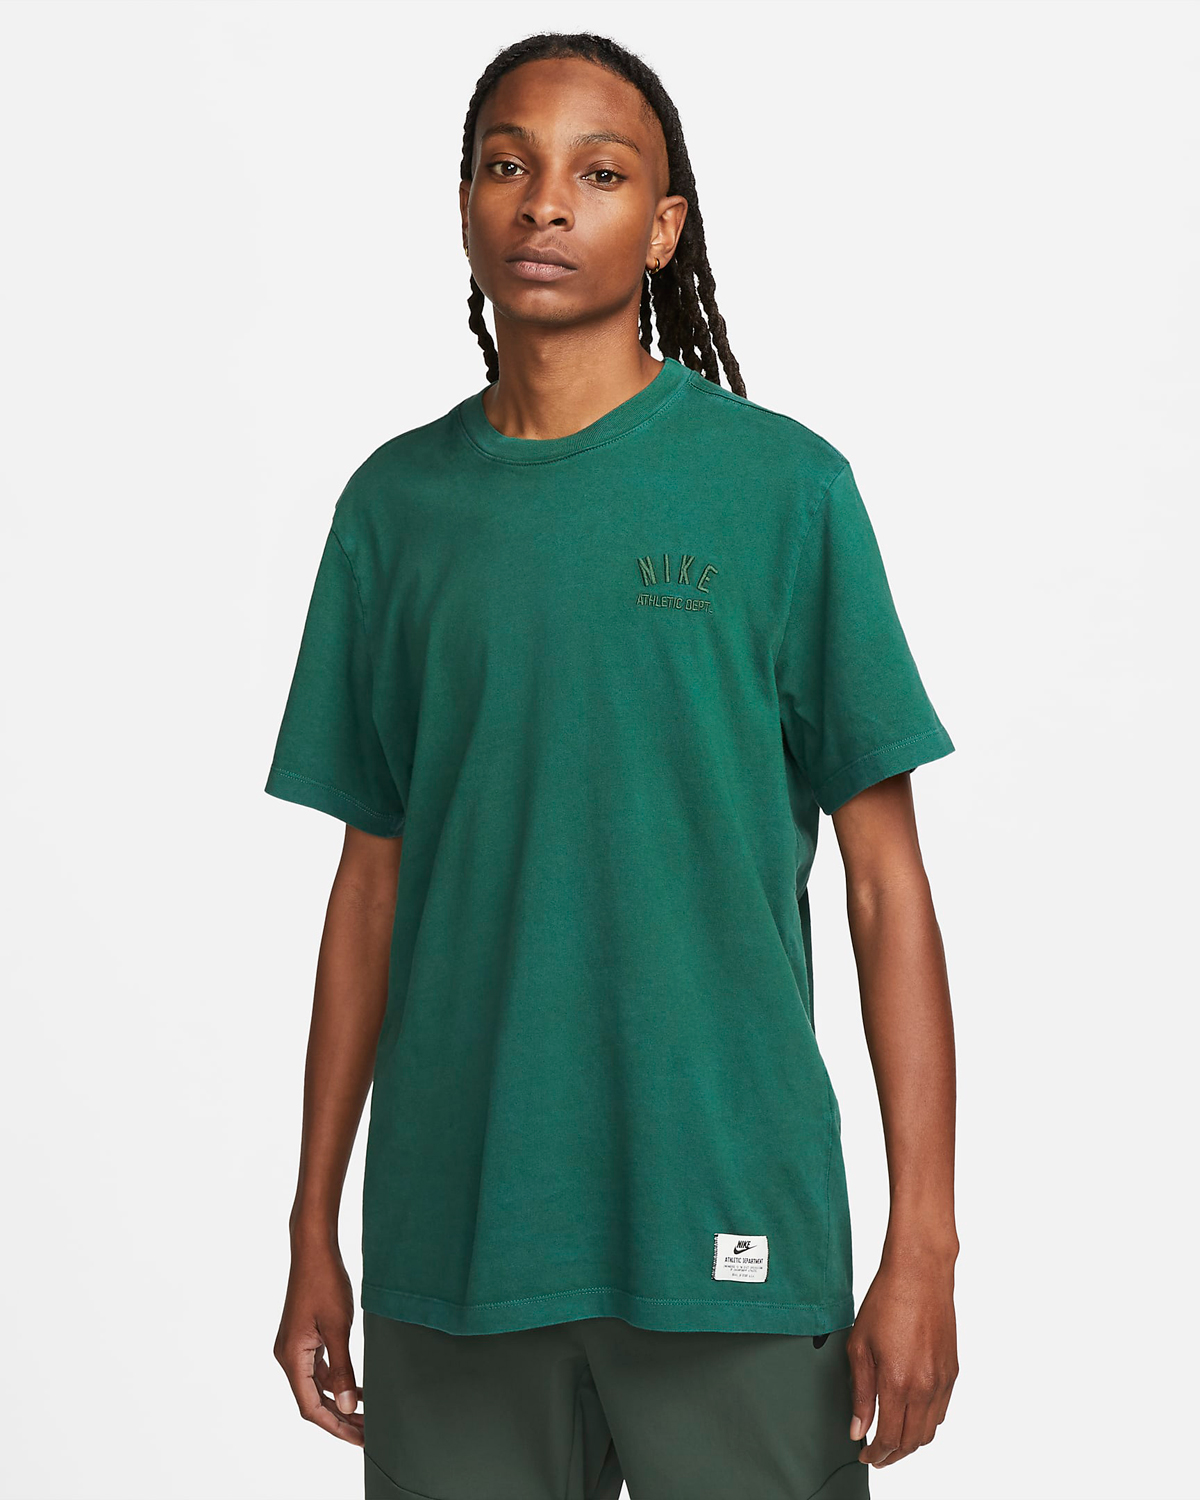 Nike-Sportswear-T-Shirt-Gorge-Green